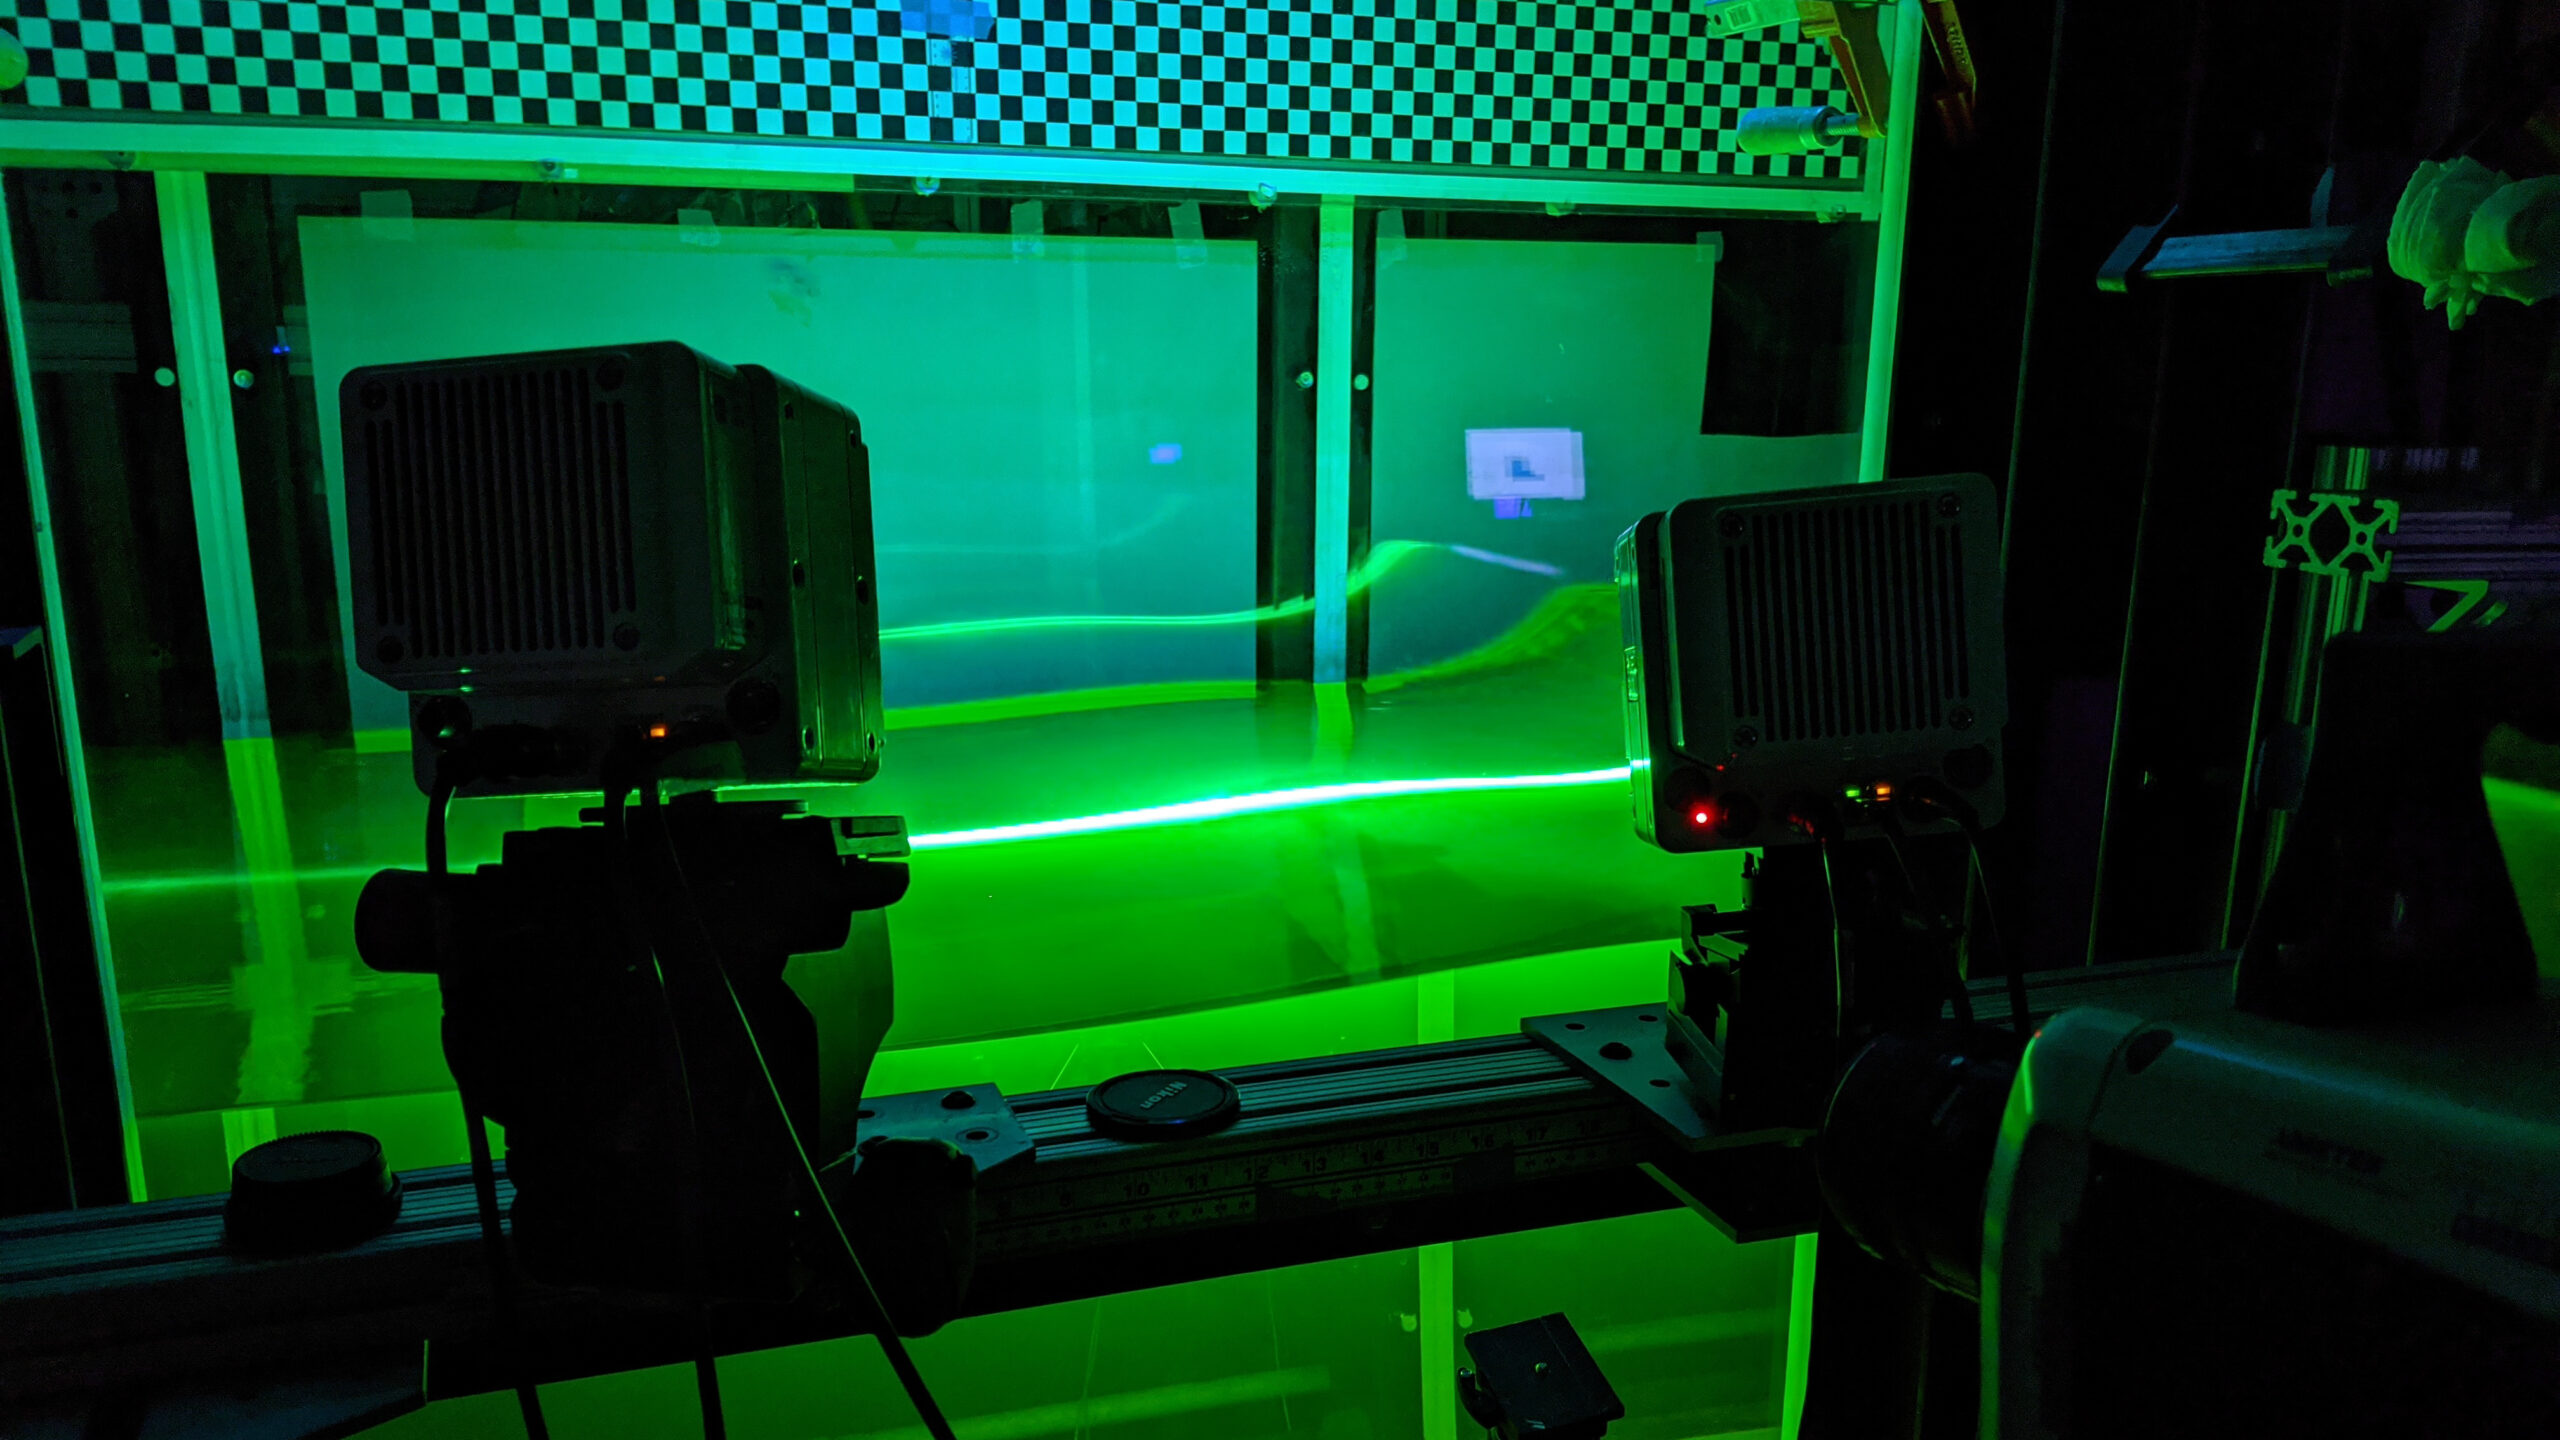 Experimental setup for measuring the 2D wave profile using laser induced fluorescence